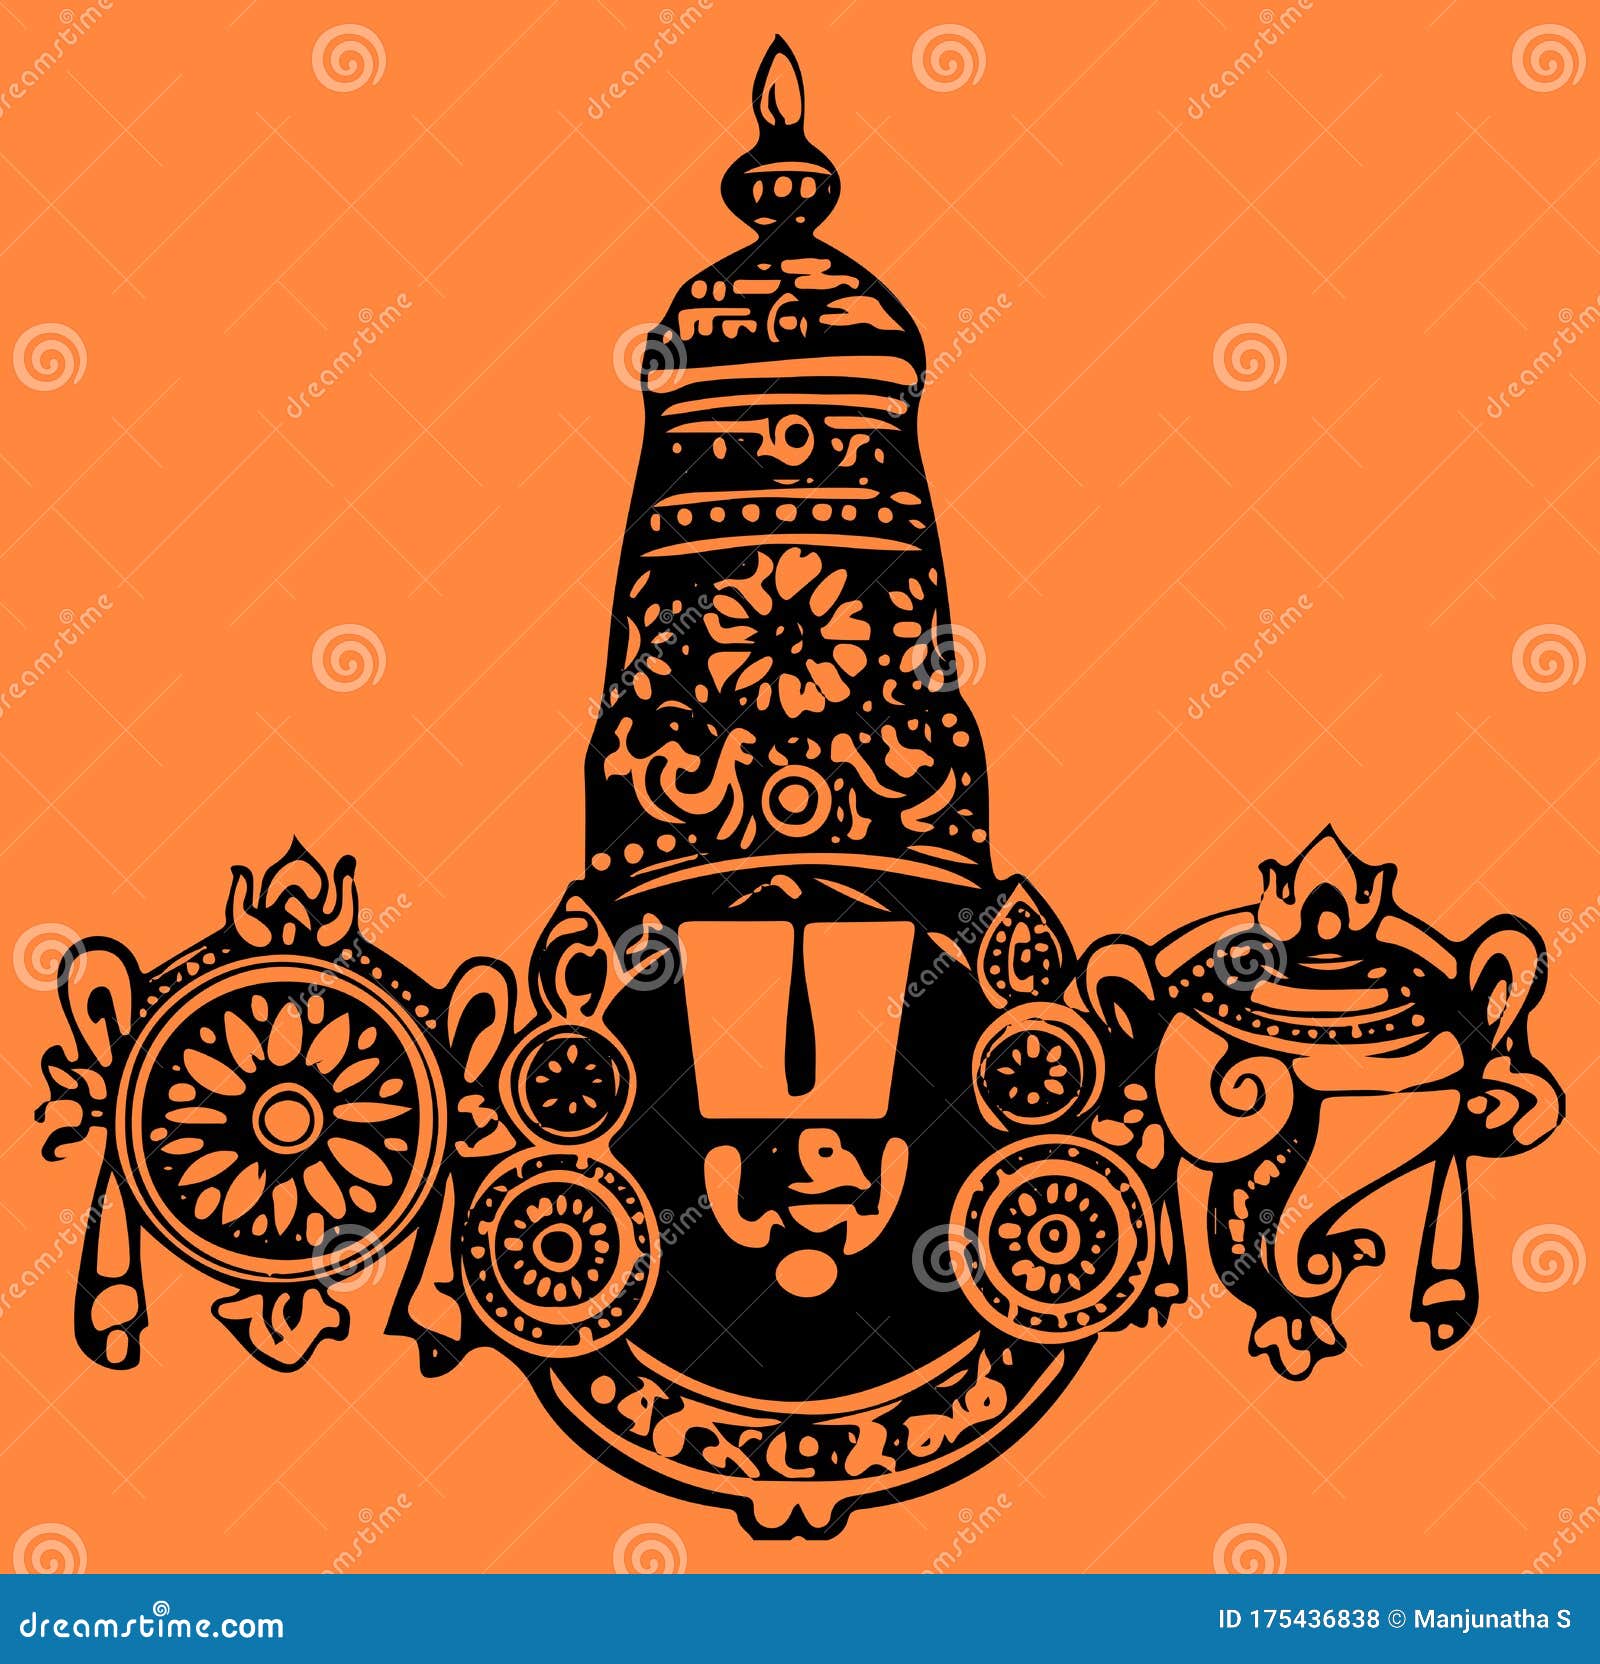 Sketch of Tirumala Tirupati God Lord Venkateshwara or Srinivasa Outline  Editable Vector Illustration Stock Vector  Illustration of religion balaji  183615699